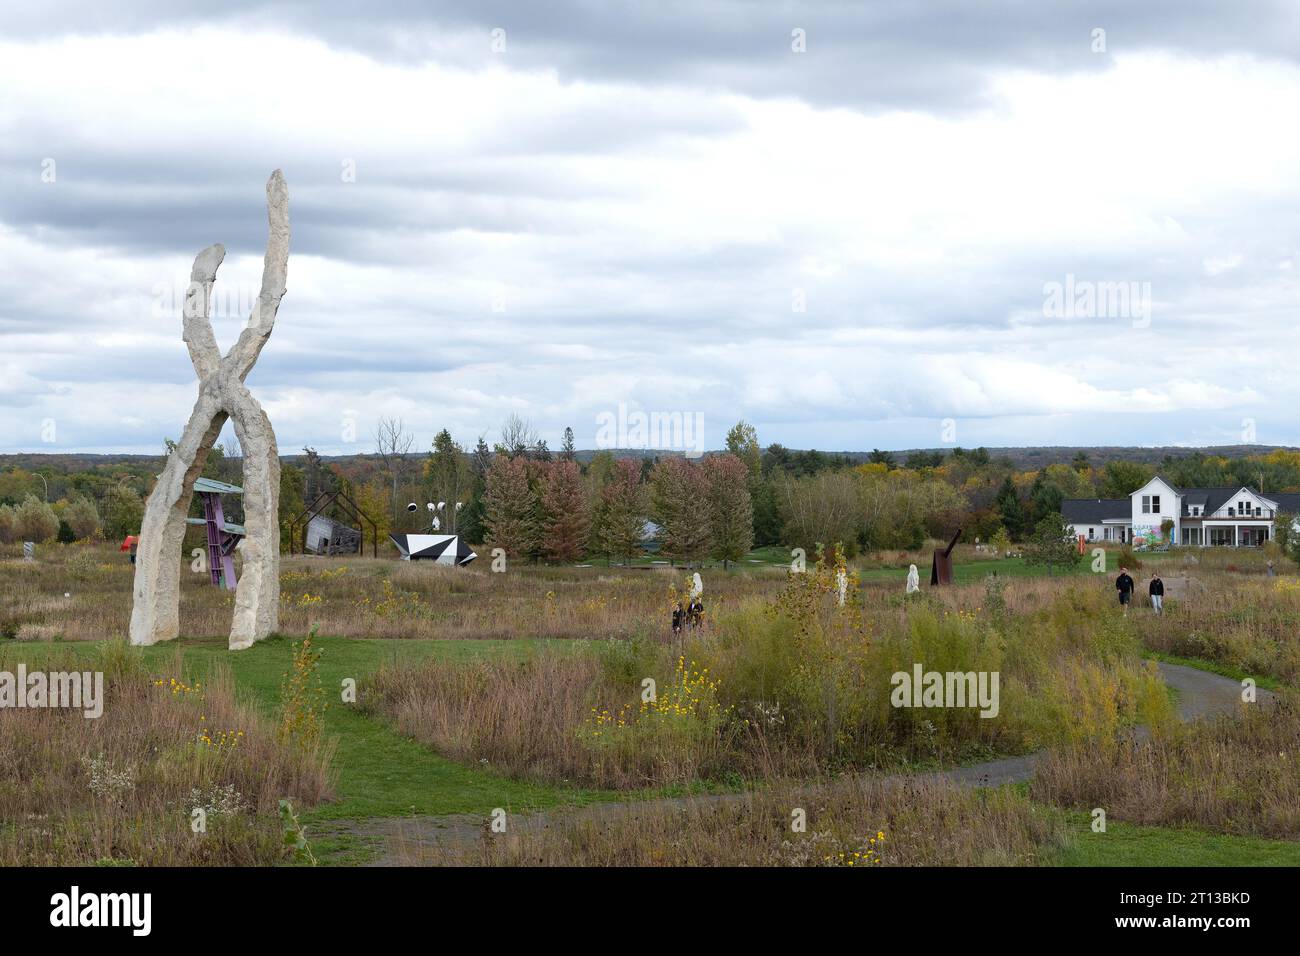 Franconia Sculpture Park in Shafer, Minnesota. Stock Photo